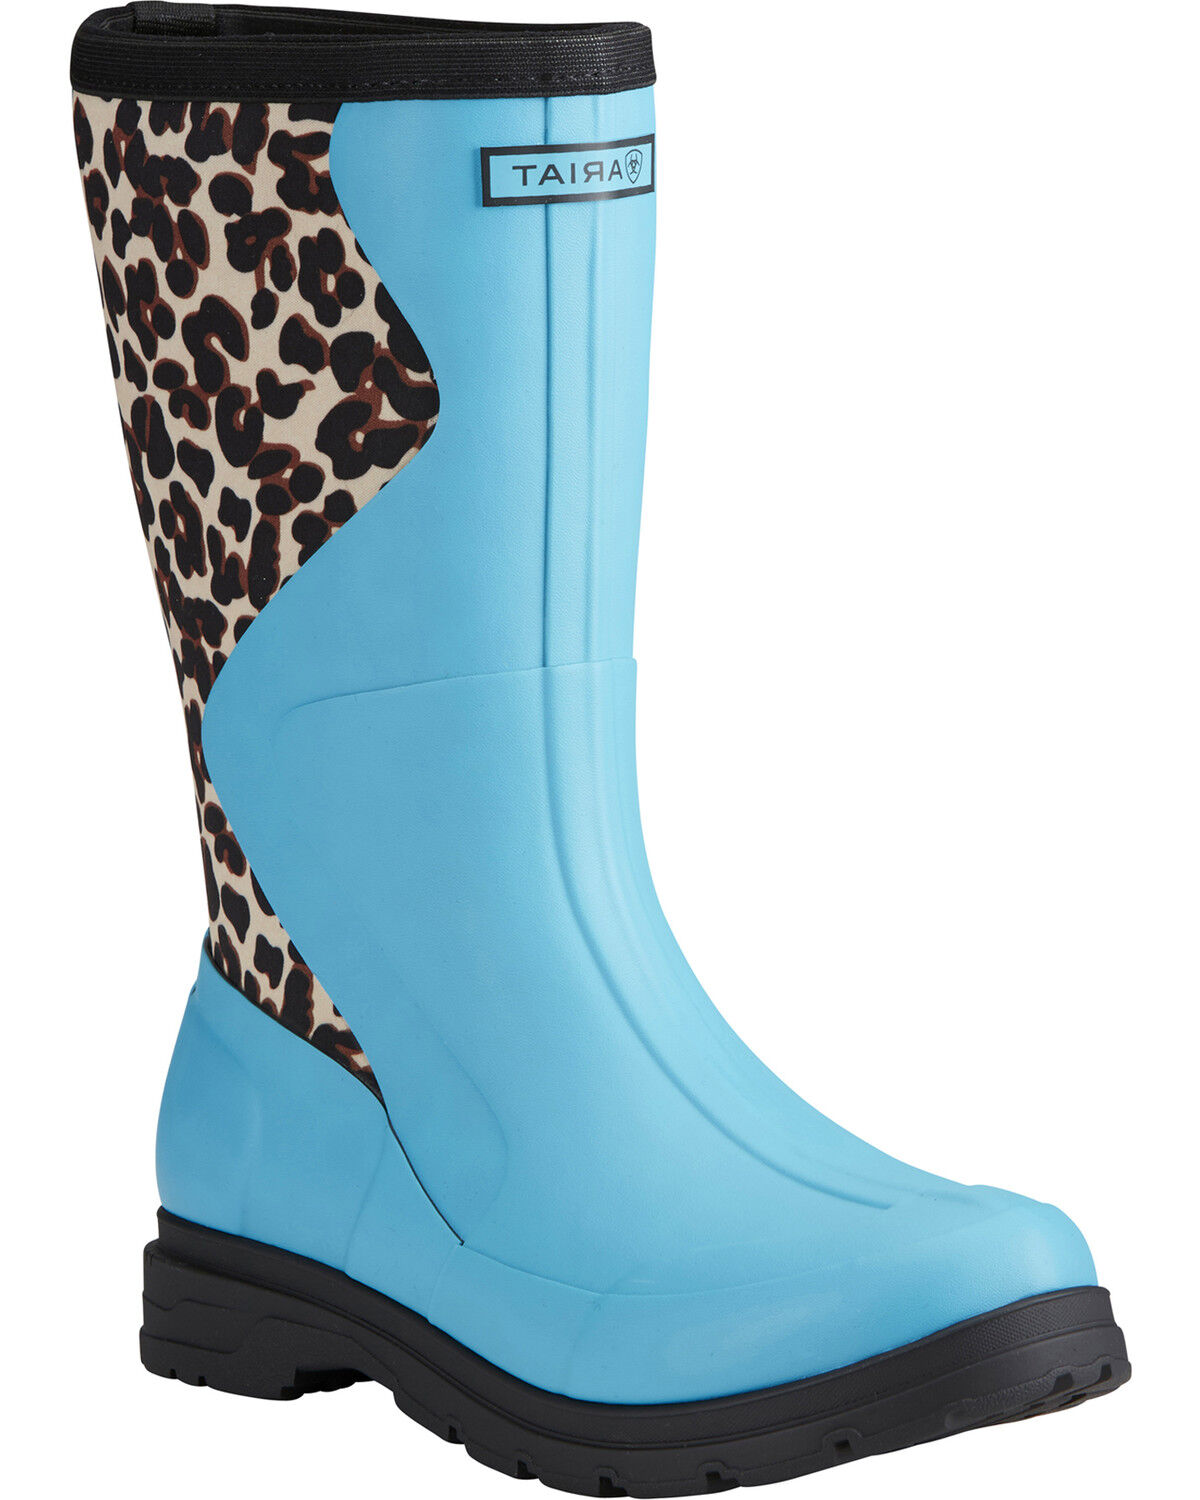 leopard rubber boots